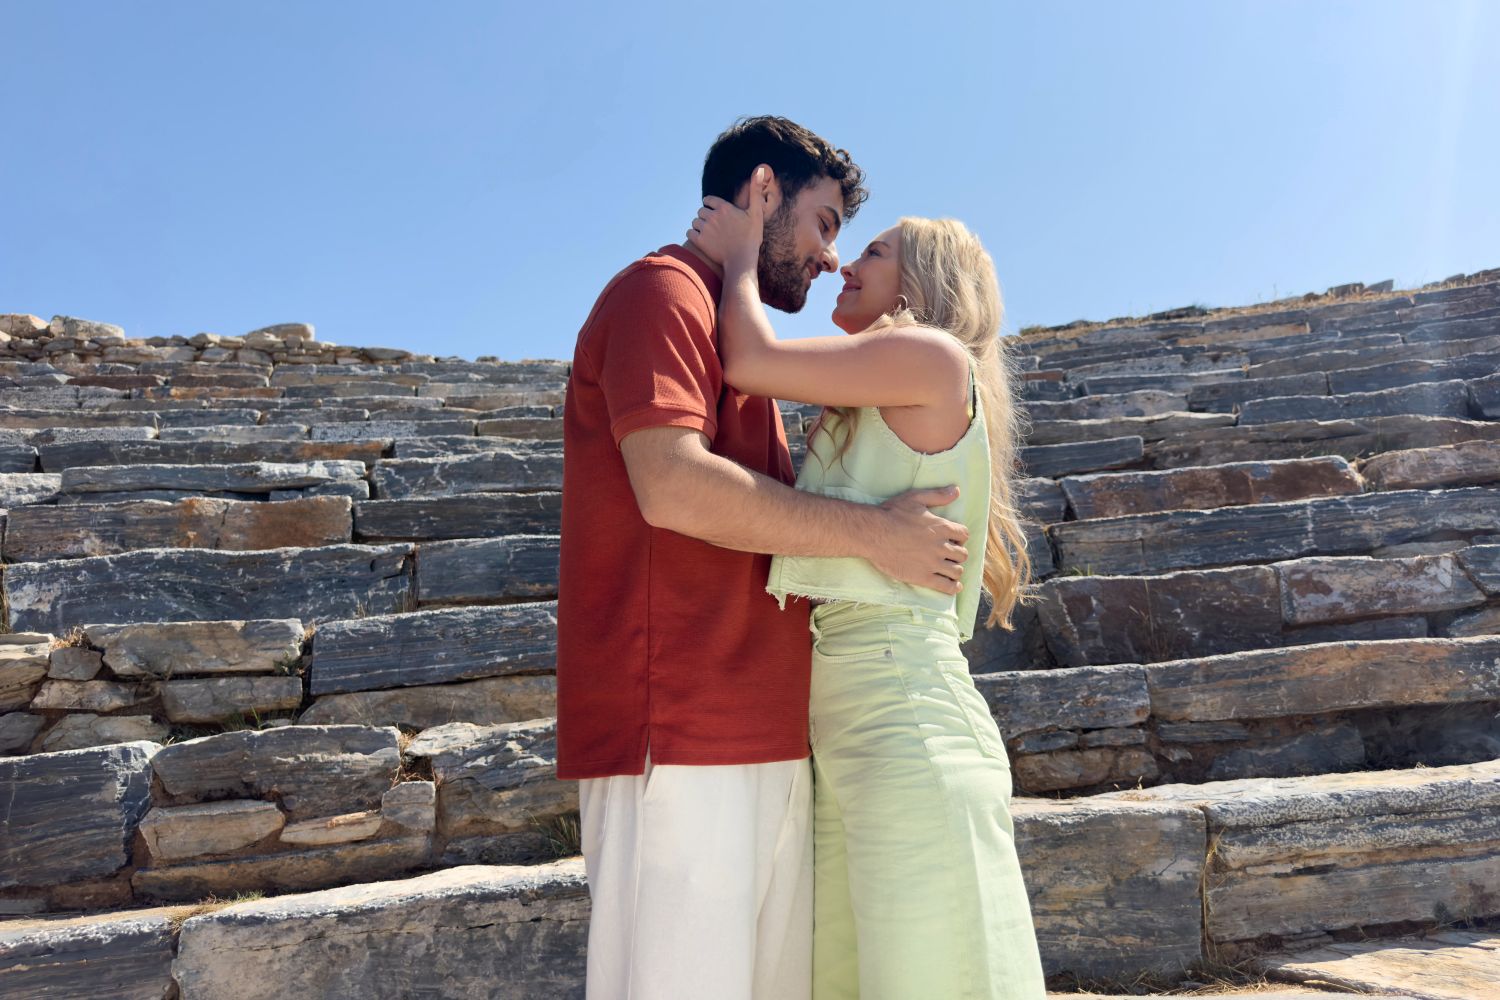 A Greek Recipe for Romance on Hallmark Channel